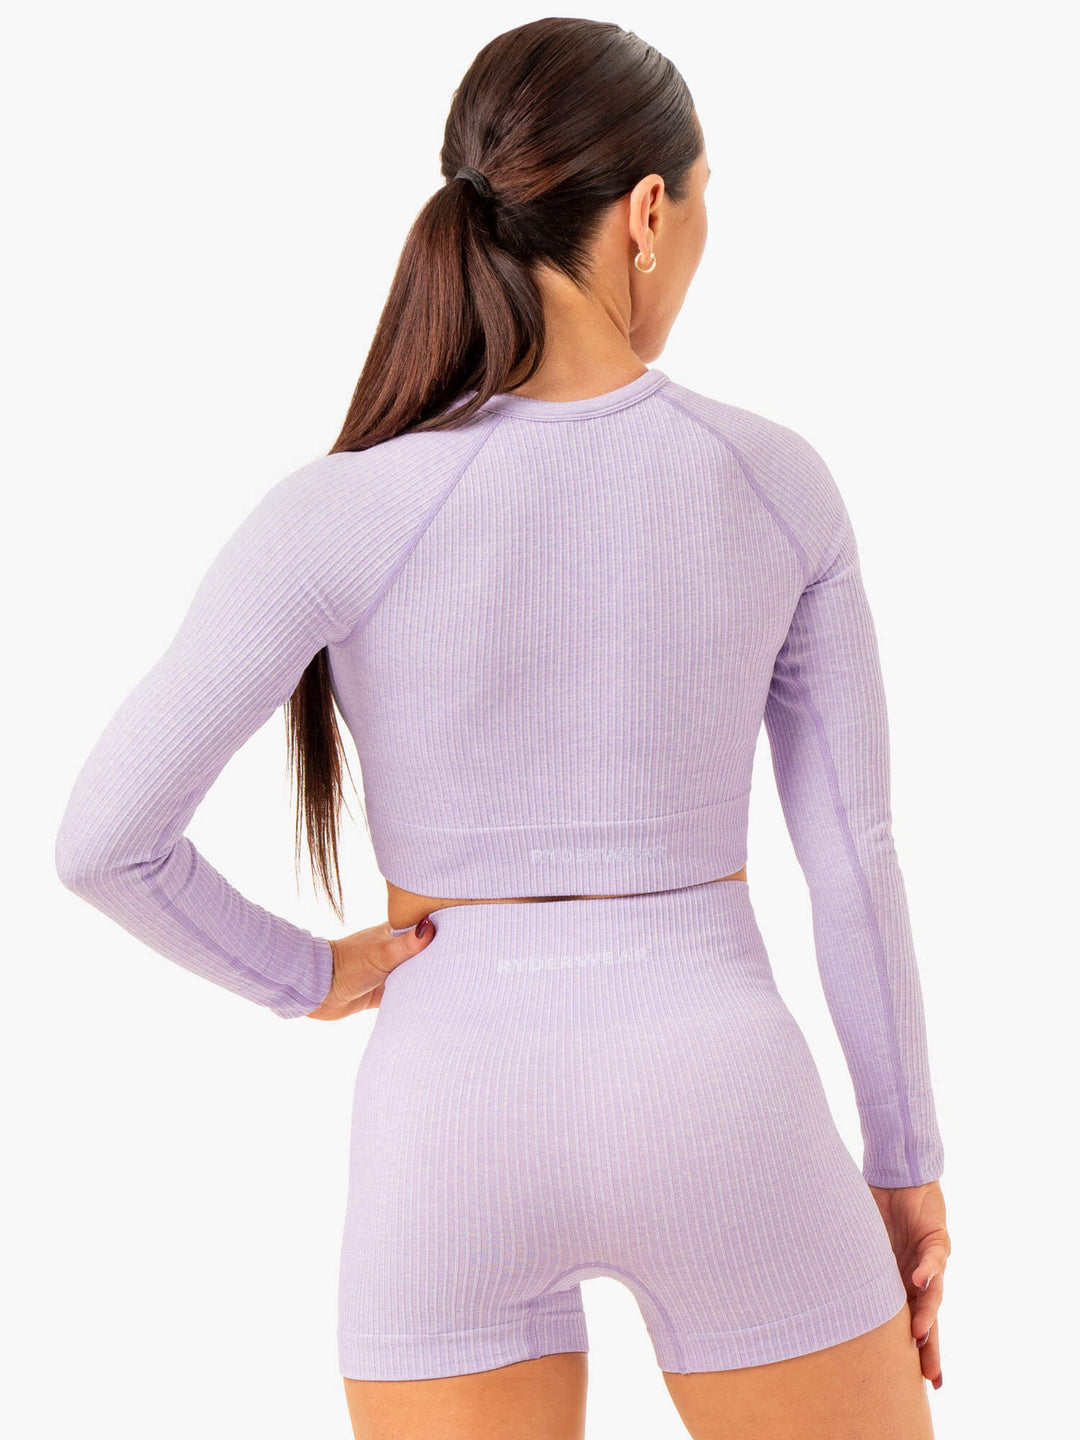 Rib Seamless Long Sleeve Top - Lavender Marl Clothing Ryderwear 